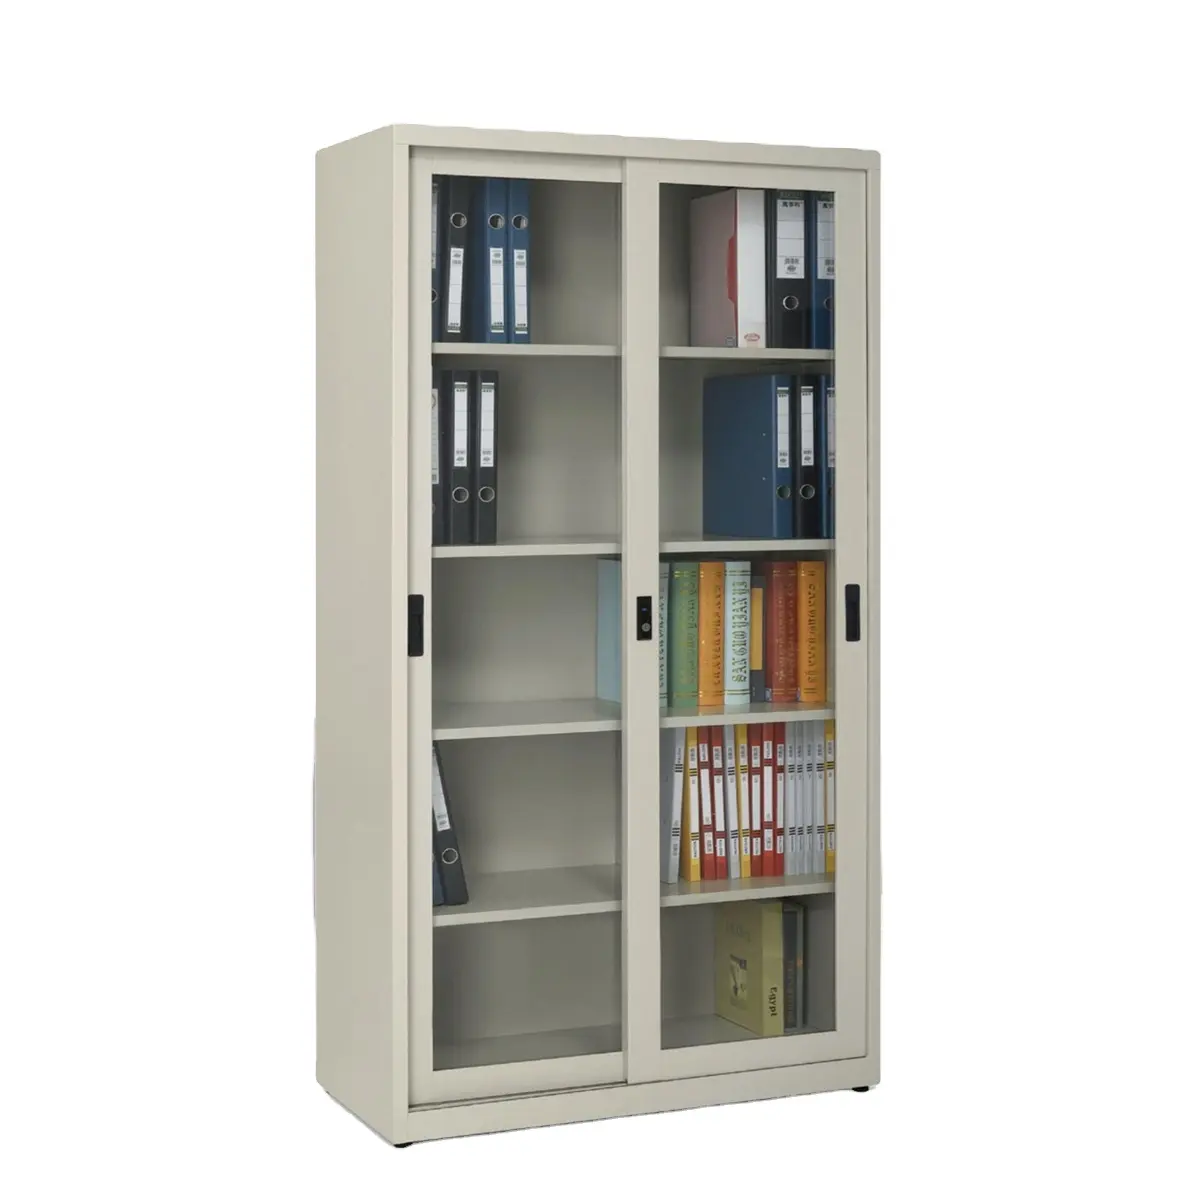 Luoyang Fengli swing 2 glass door metal book cupboard sliding steel file cabinet